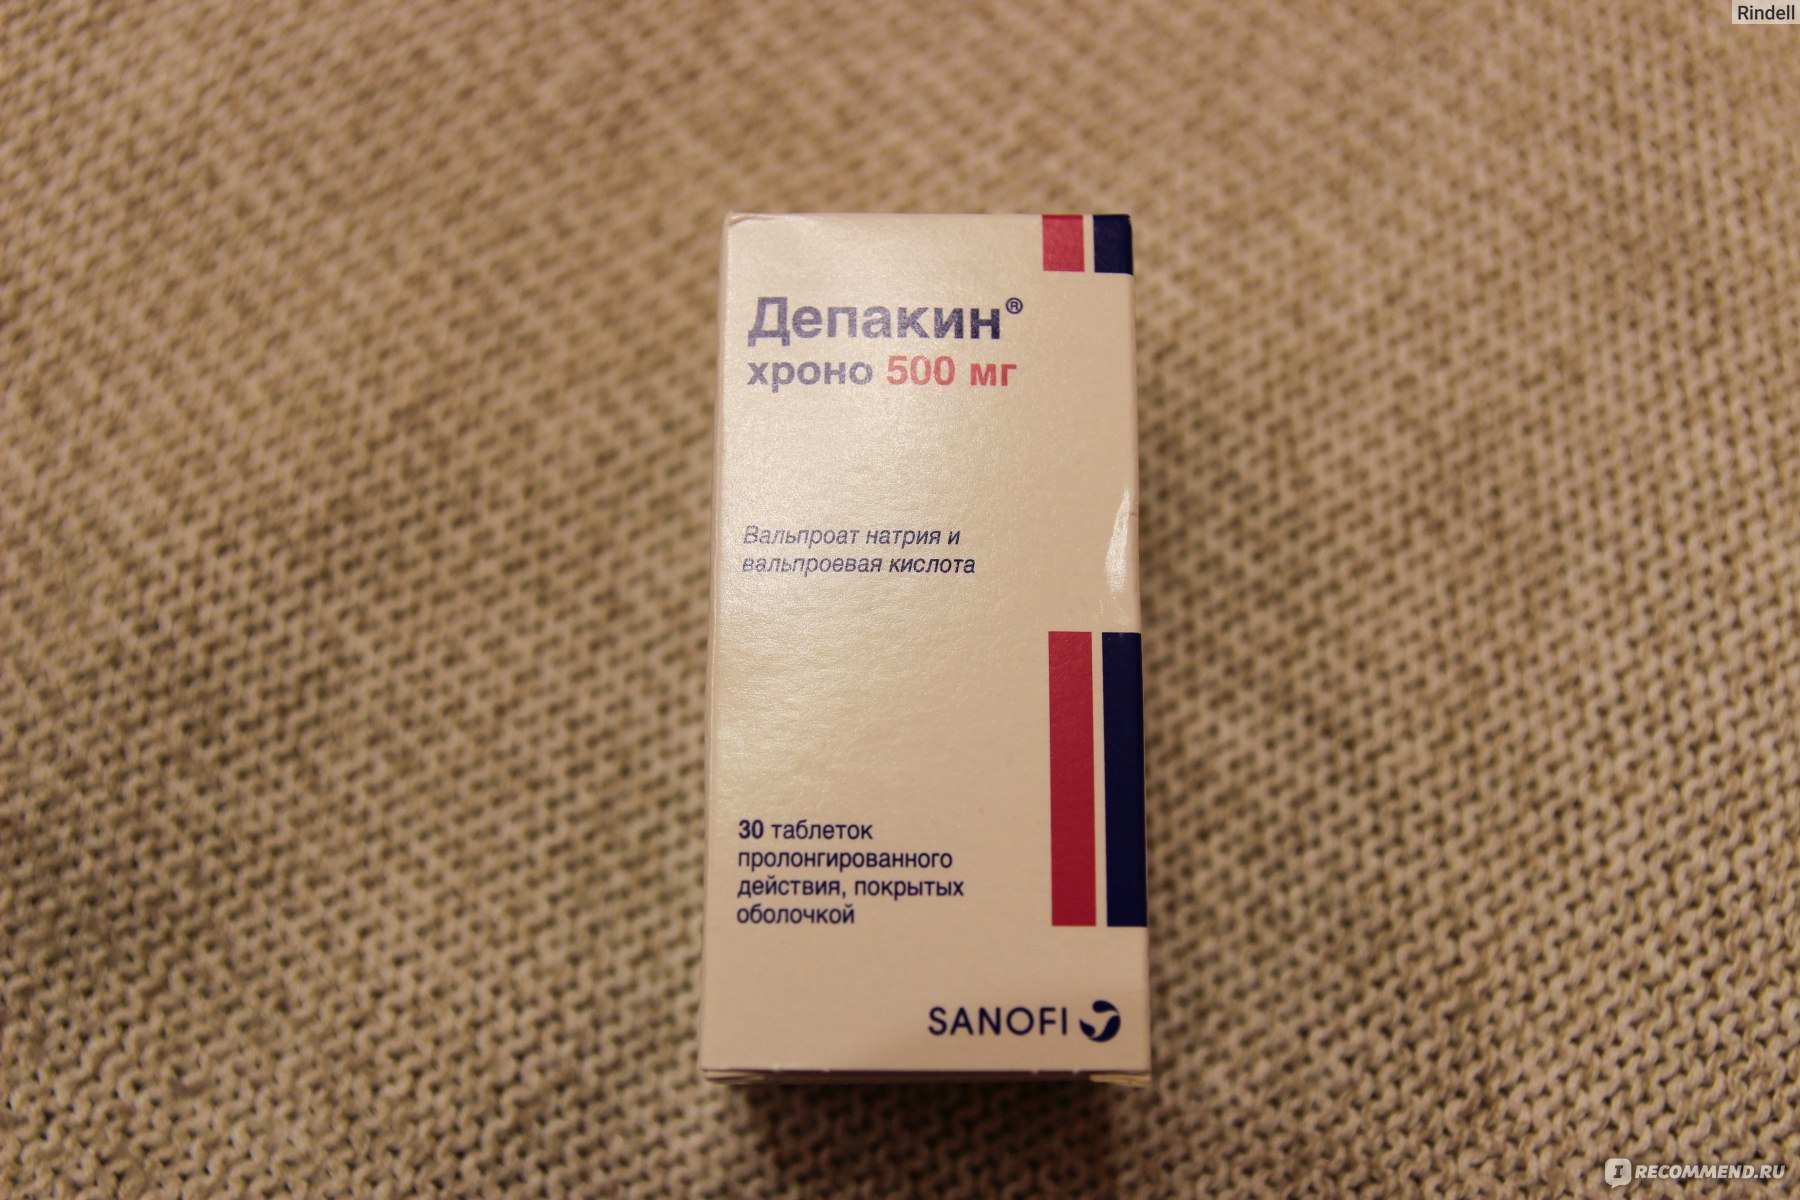 Таблетки ДЕПАКИН ХРОНО (Sanofi, Франция) - противоэпилептический и .